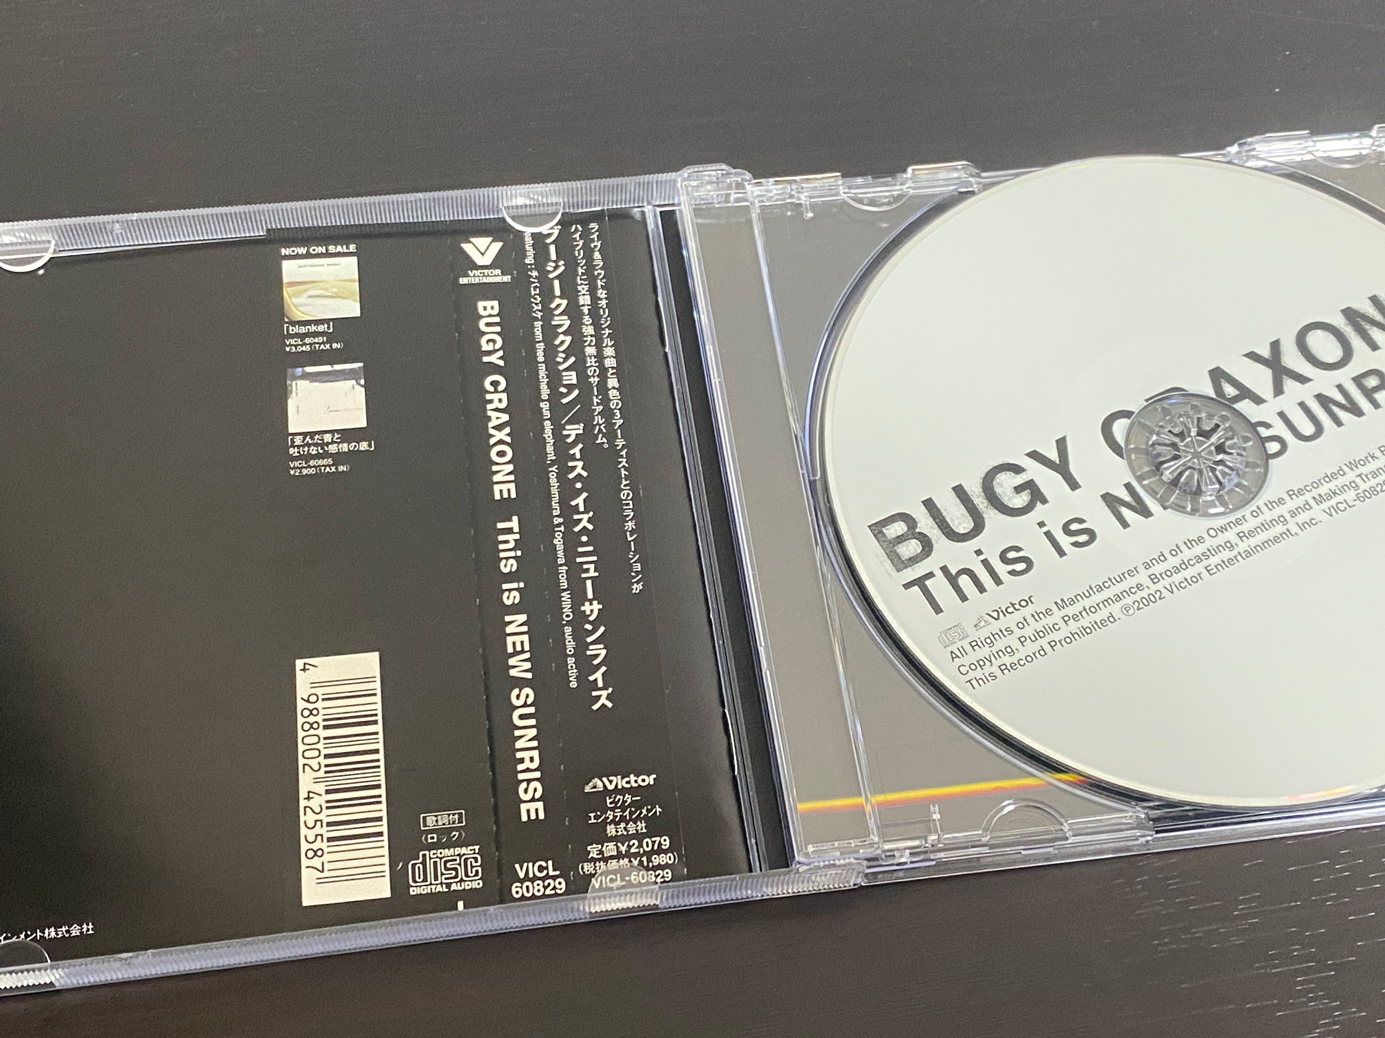 BUGY CRAXONE「This is NEW SUNRIZE」の収録曲